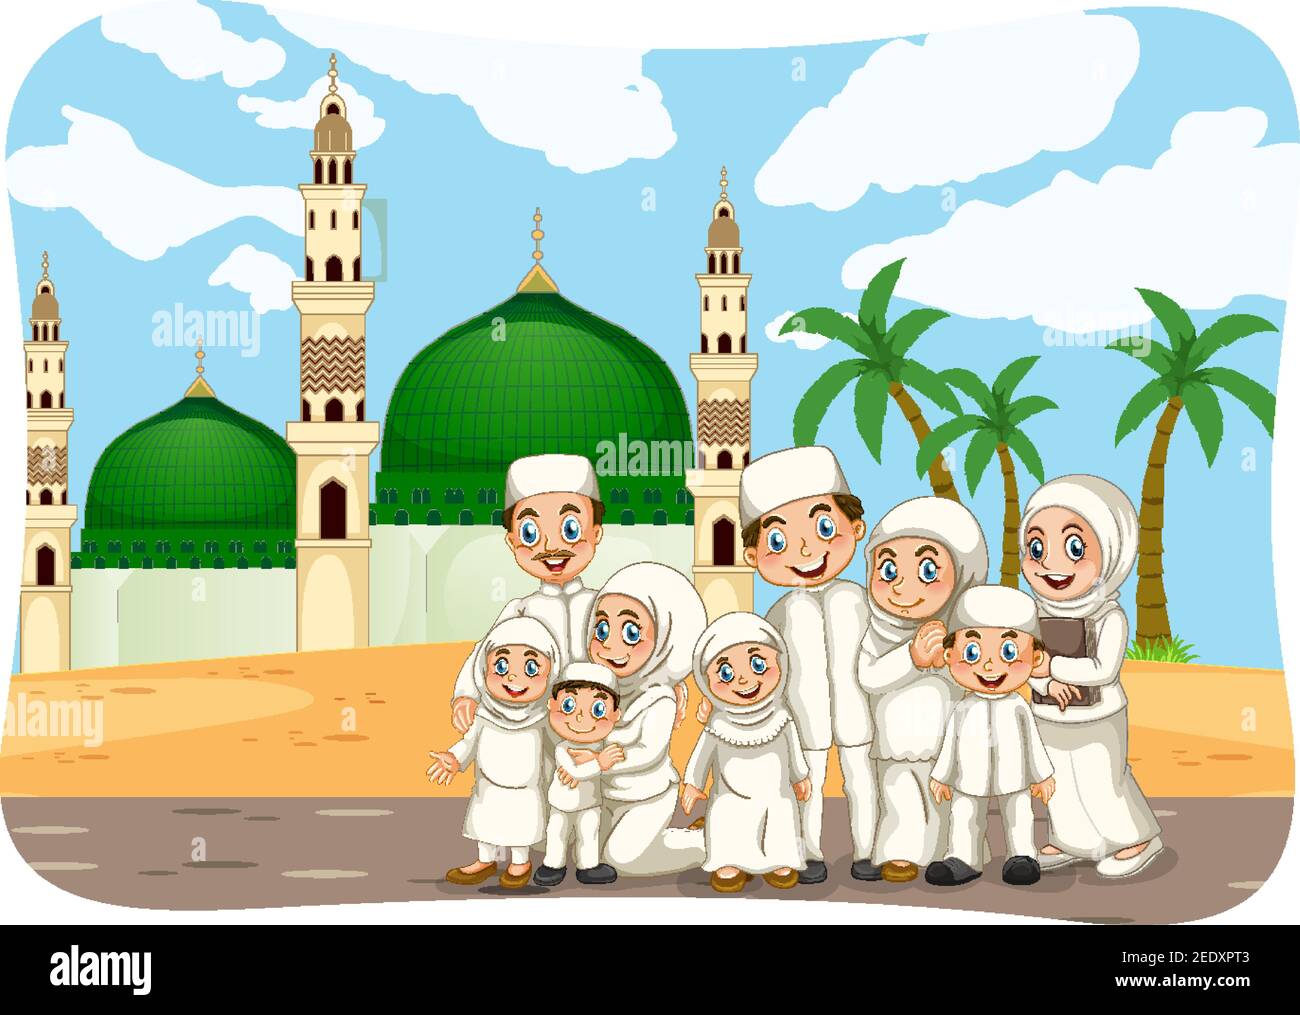 Scene with muslim family cartoon character illustration Stock Vector